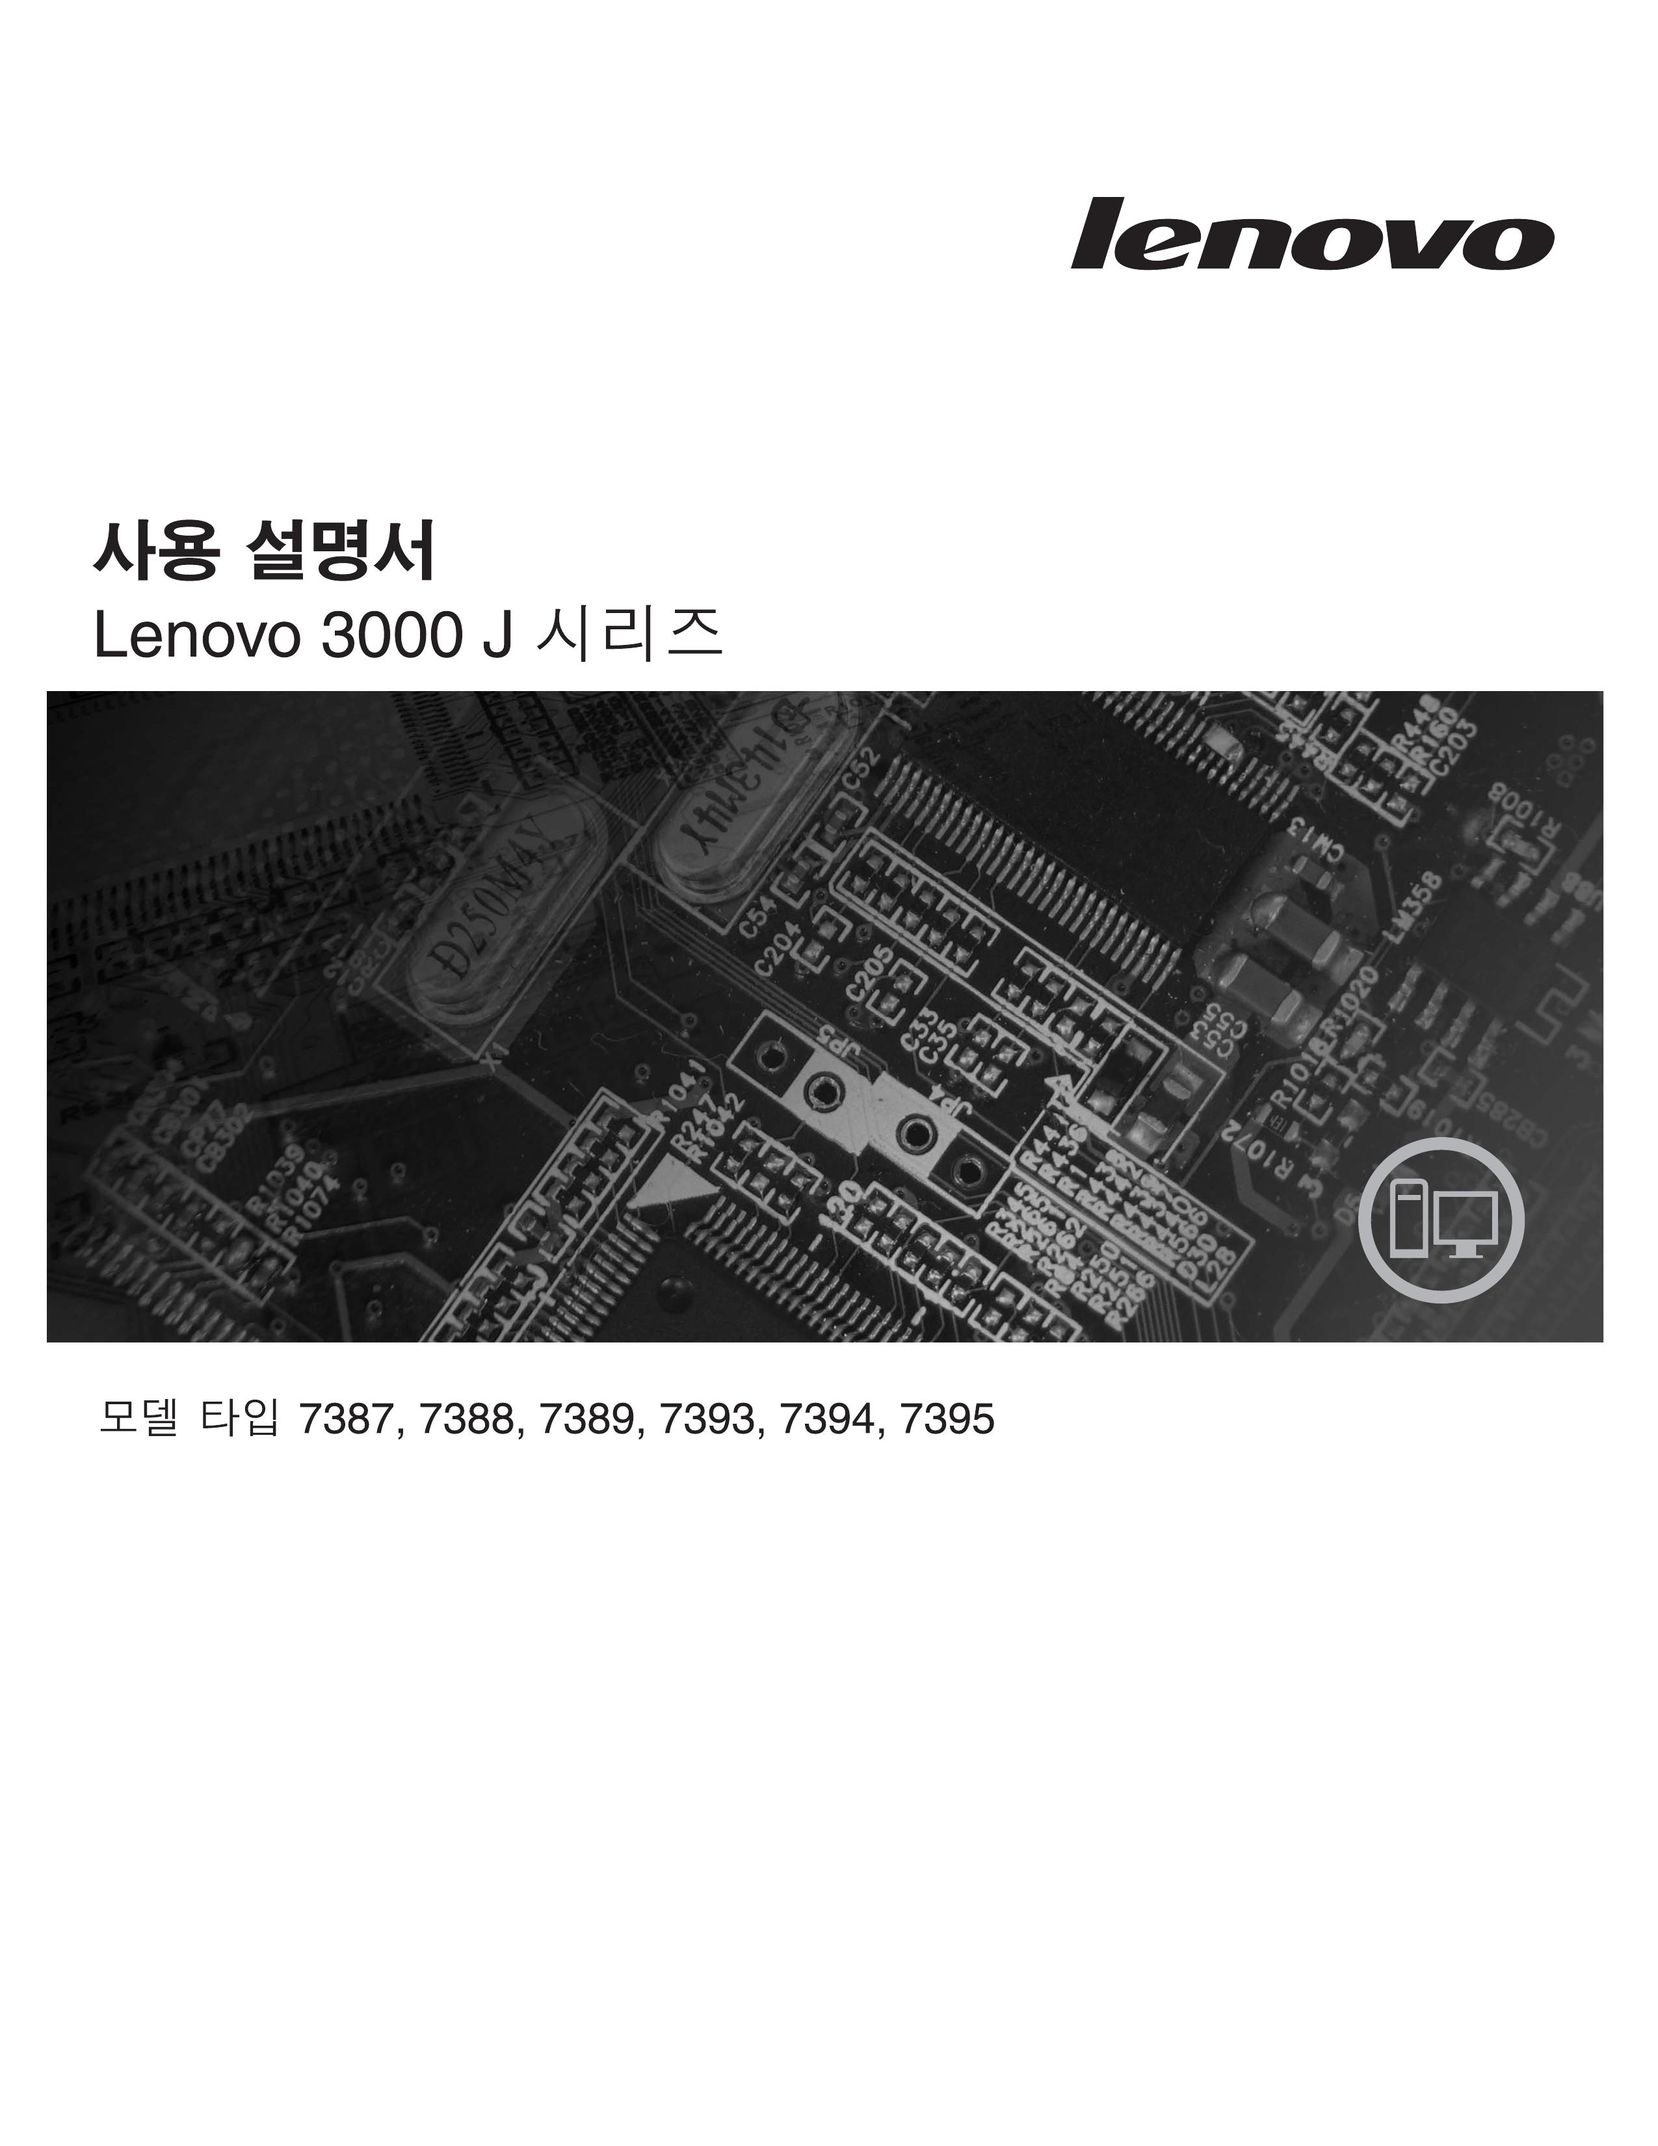 Lenovo 7395 Stereo System User Manual